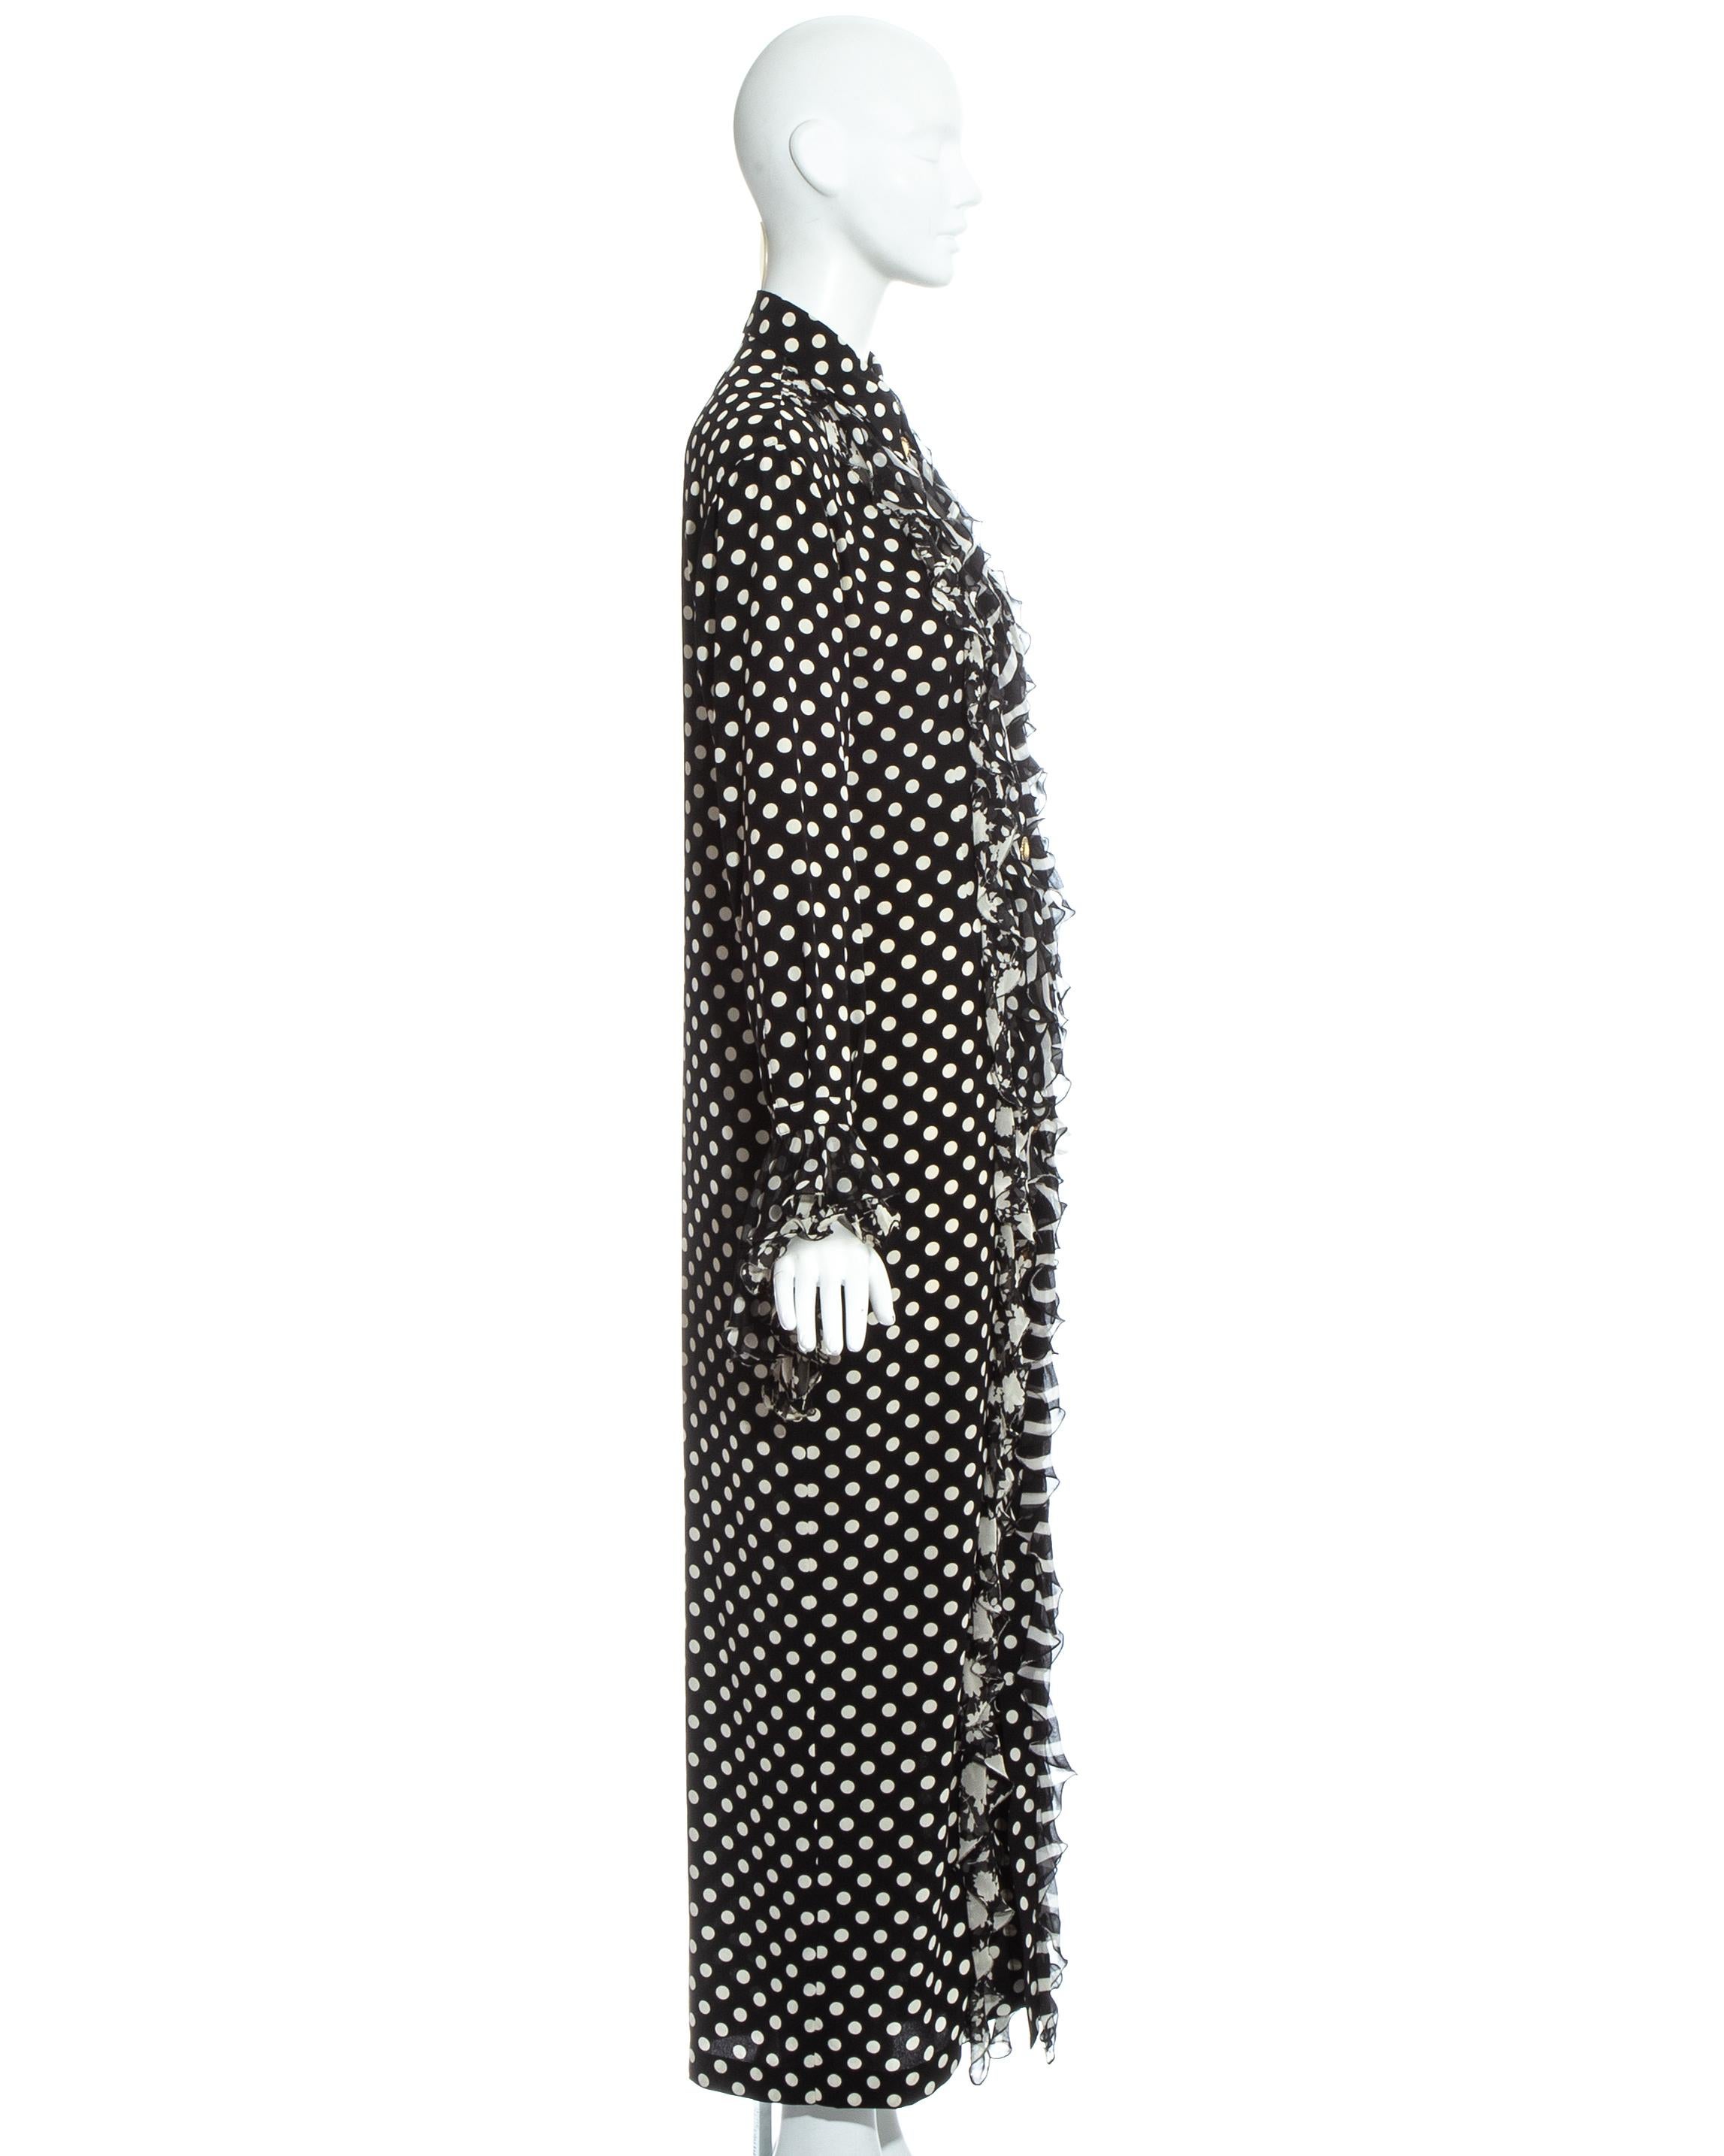 Gianni Versace black and white polkadot silk ruffled shirt dress, ss 1993 3